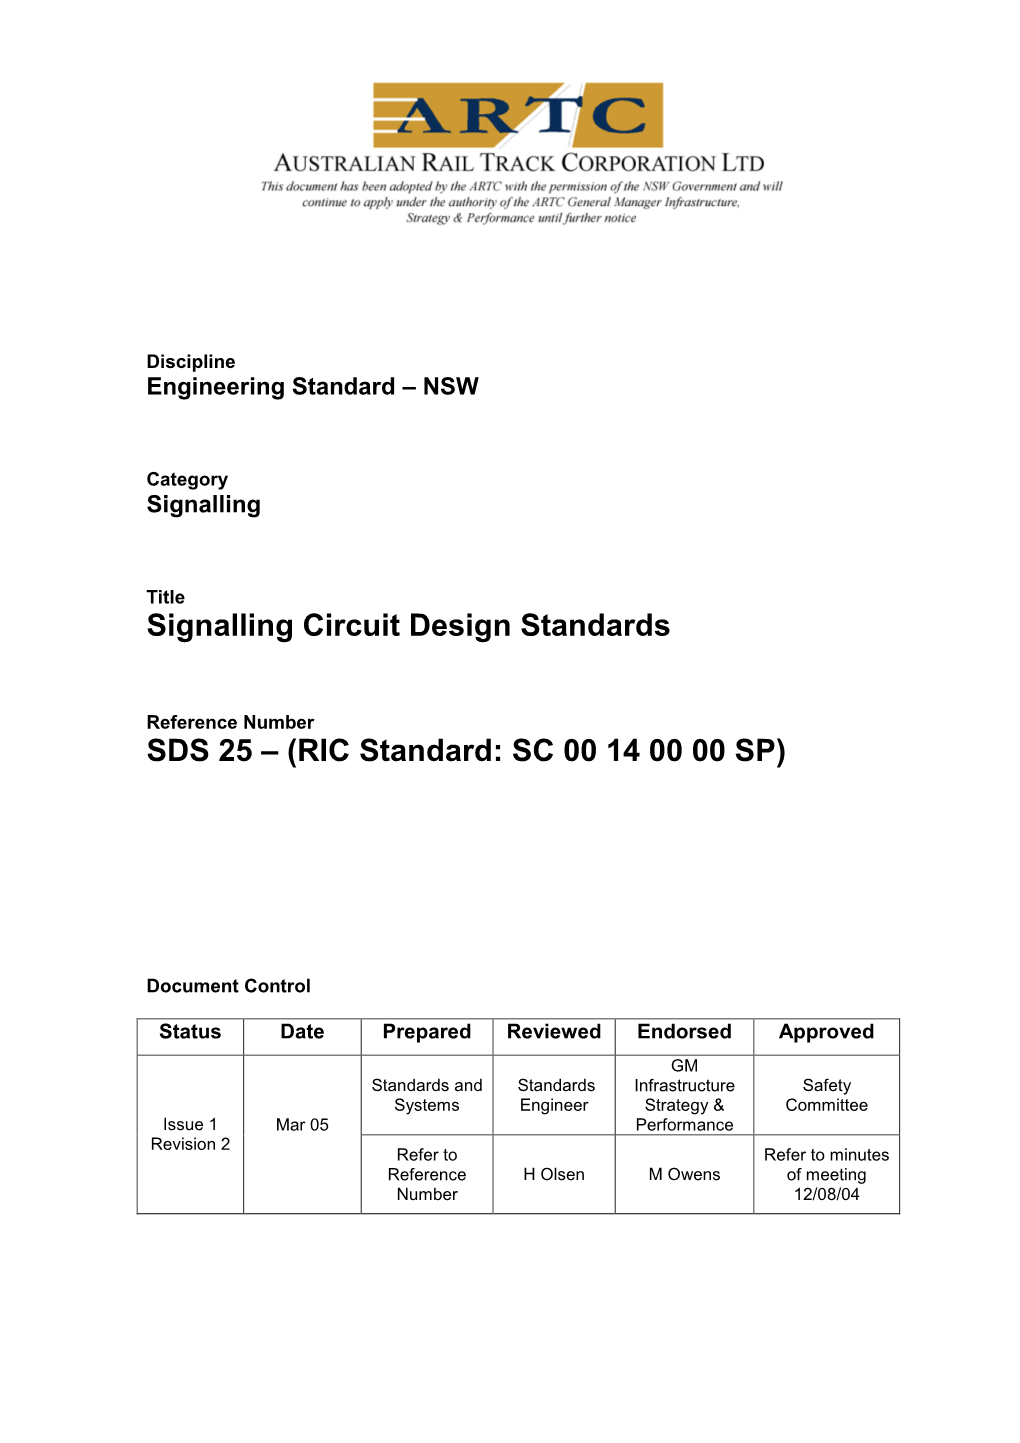 Signalling Circuit Design Standards SDS 25